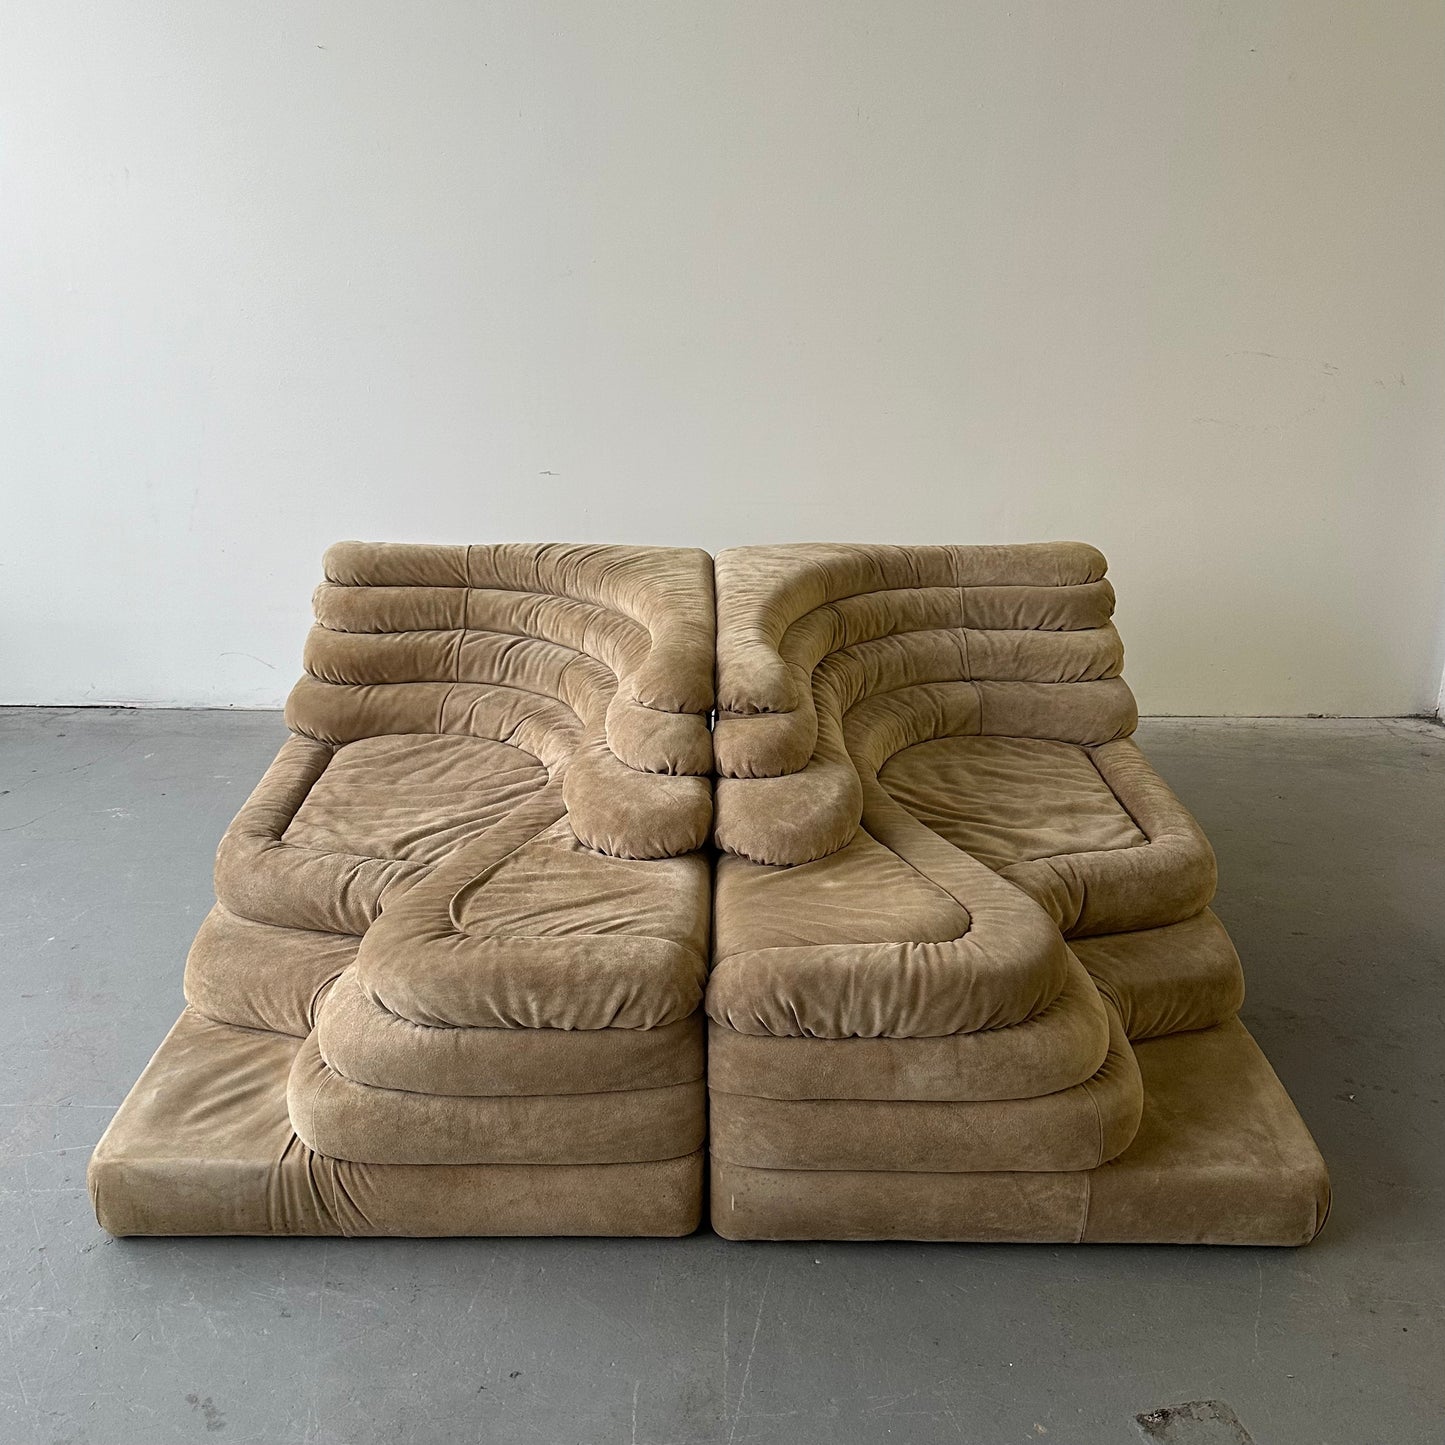 De Sede Terrazza Sofas by Ubald Klug, a pair